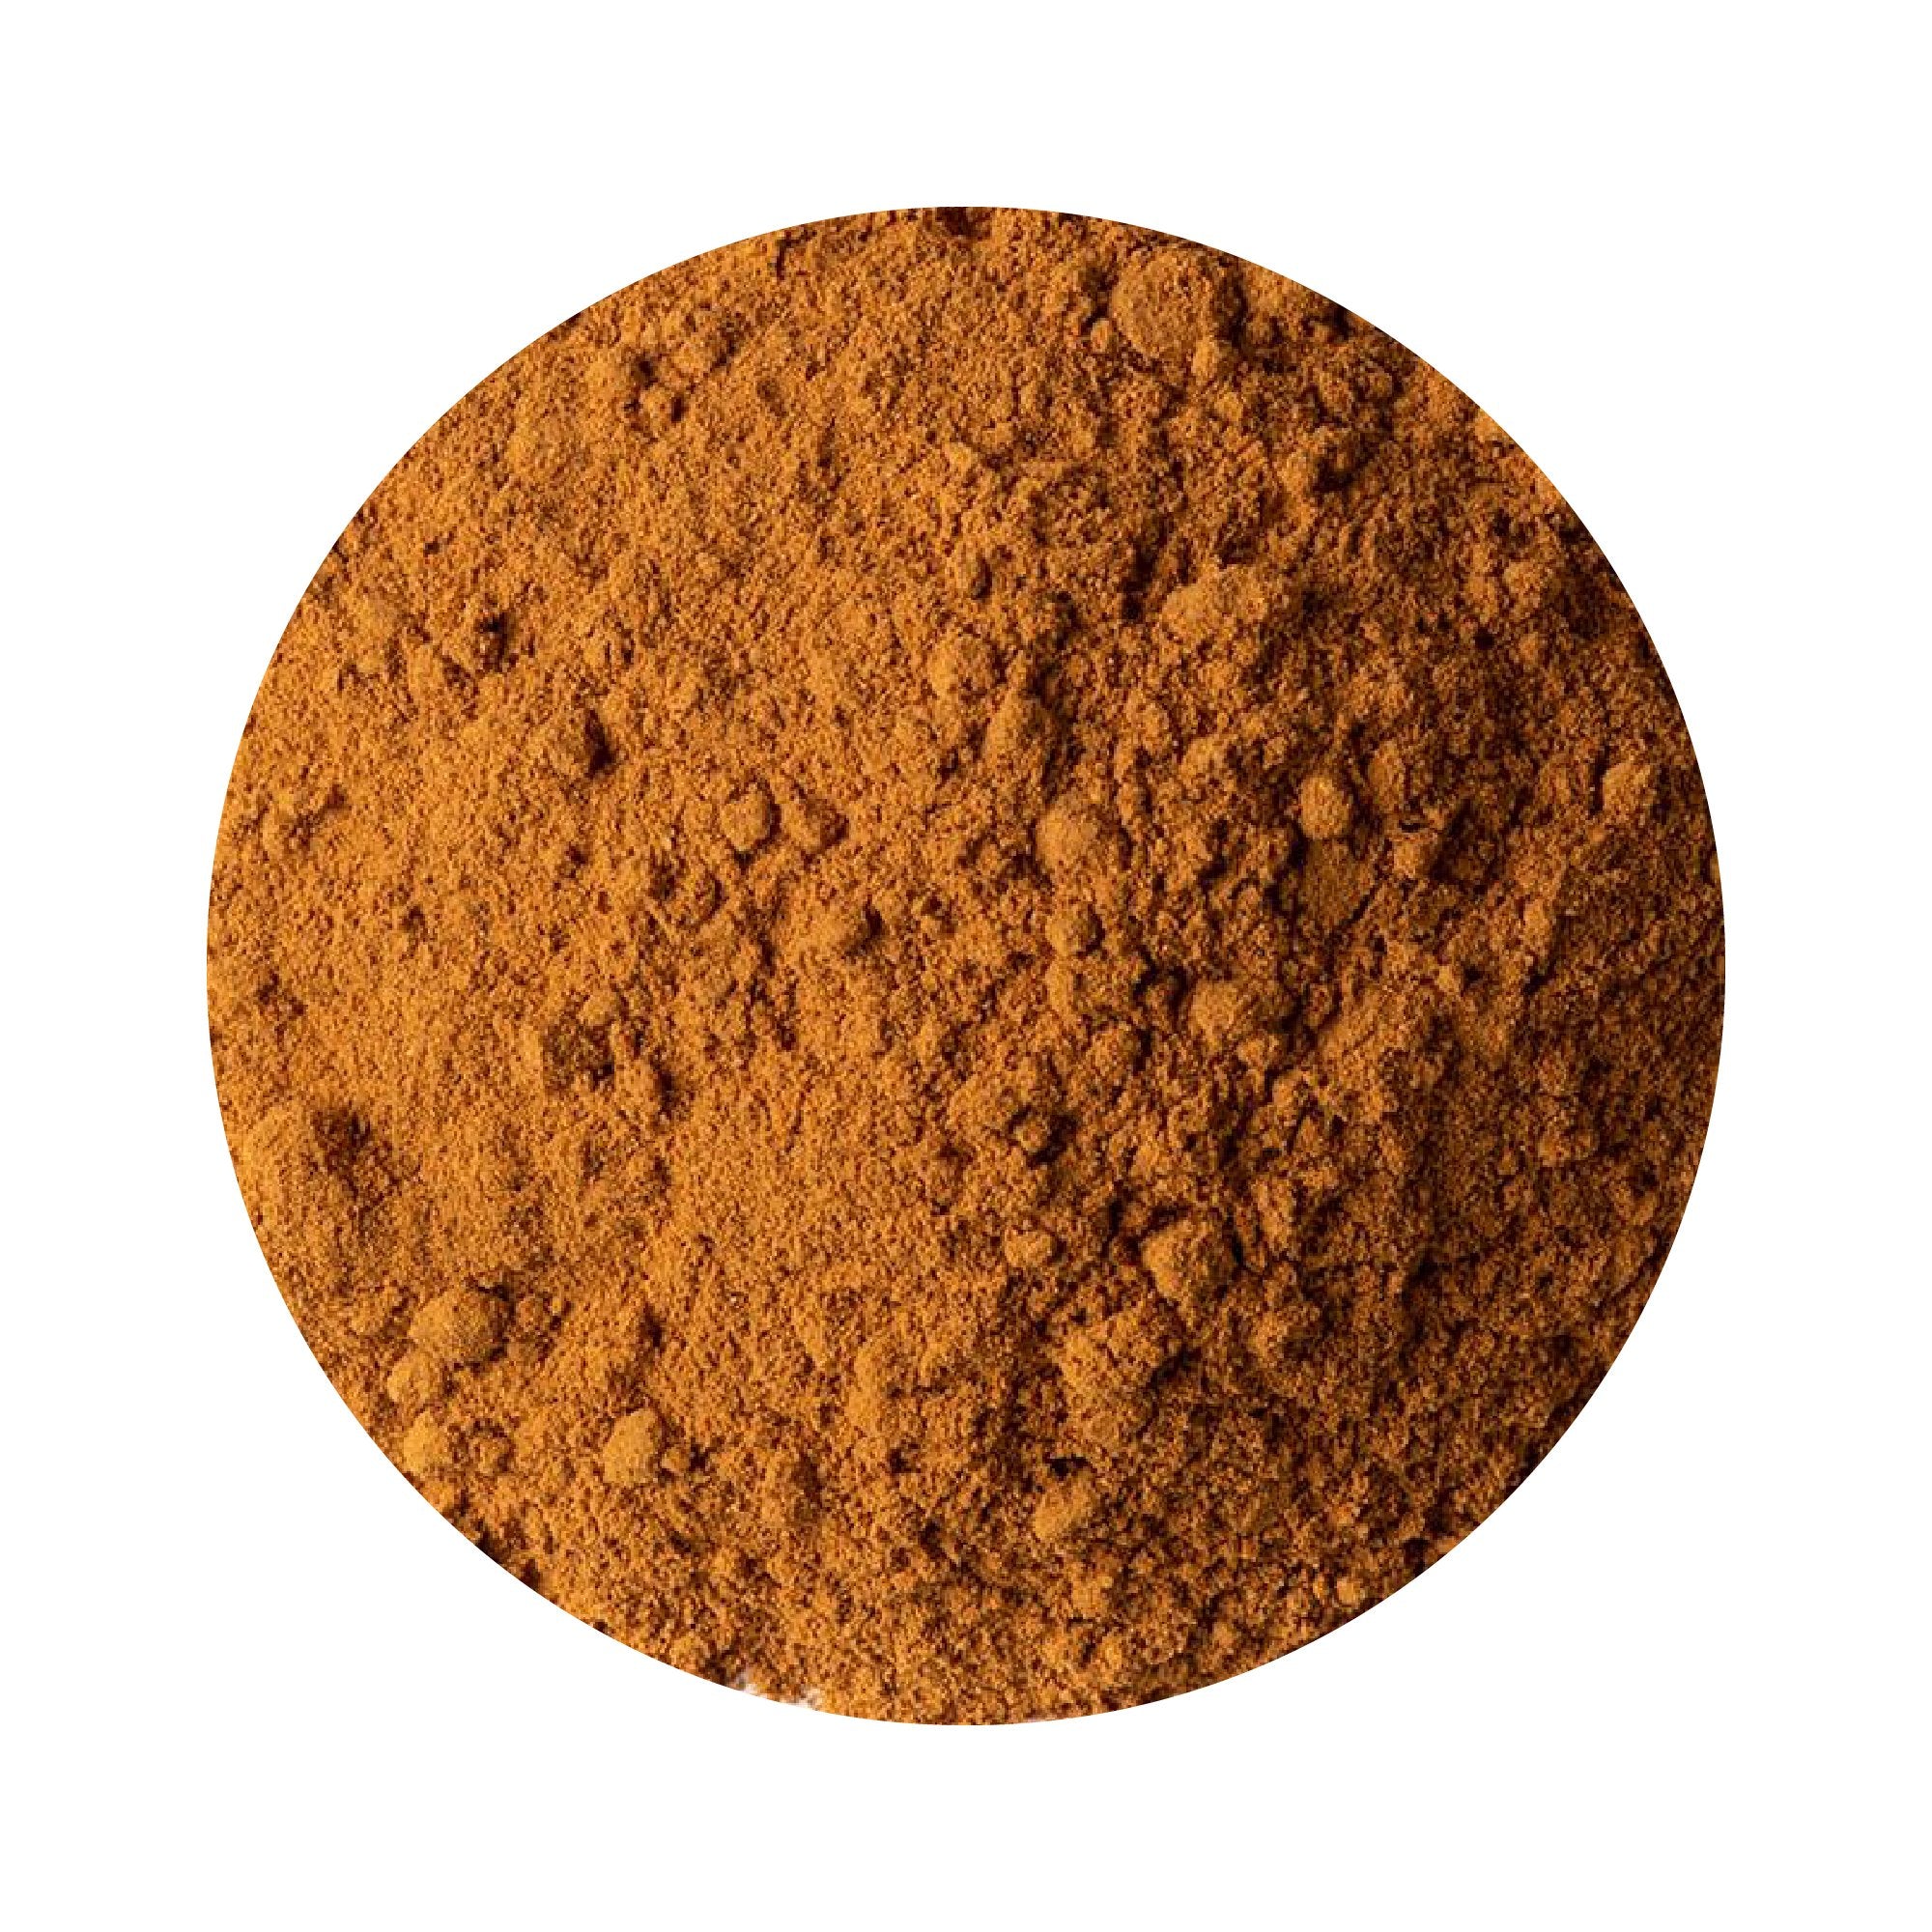 Organic Cinnamon, Ceylon, Ground, India - 5lb